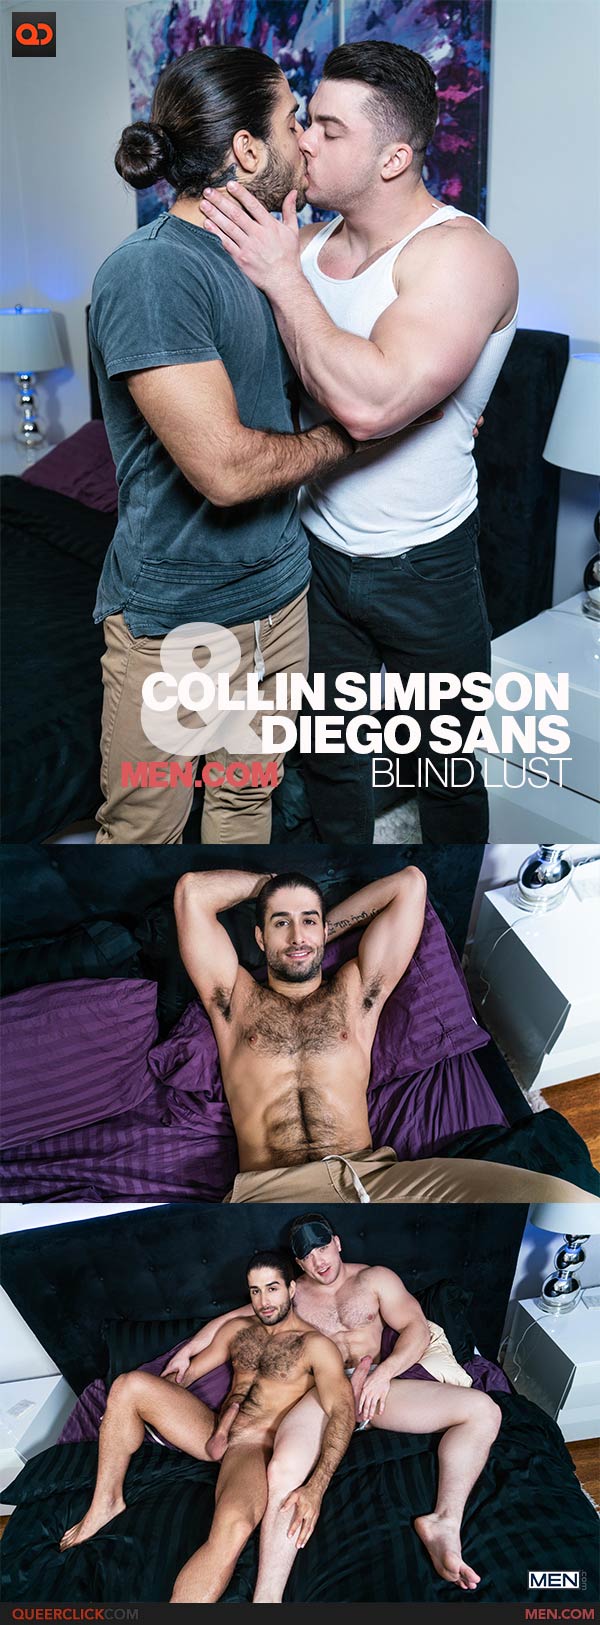 Men.com: Collin Simpson and Diego Sans